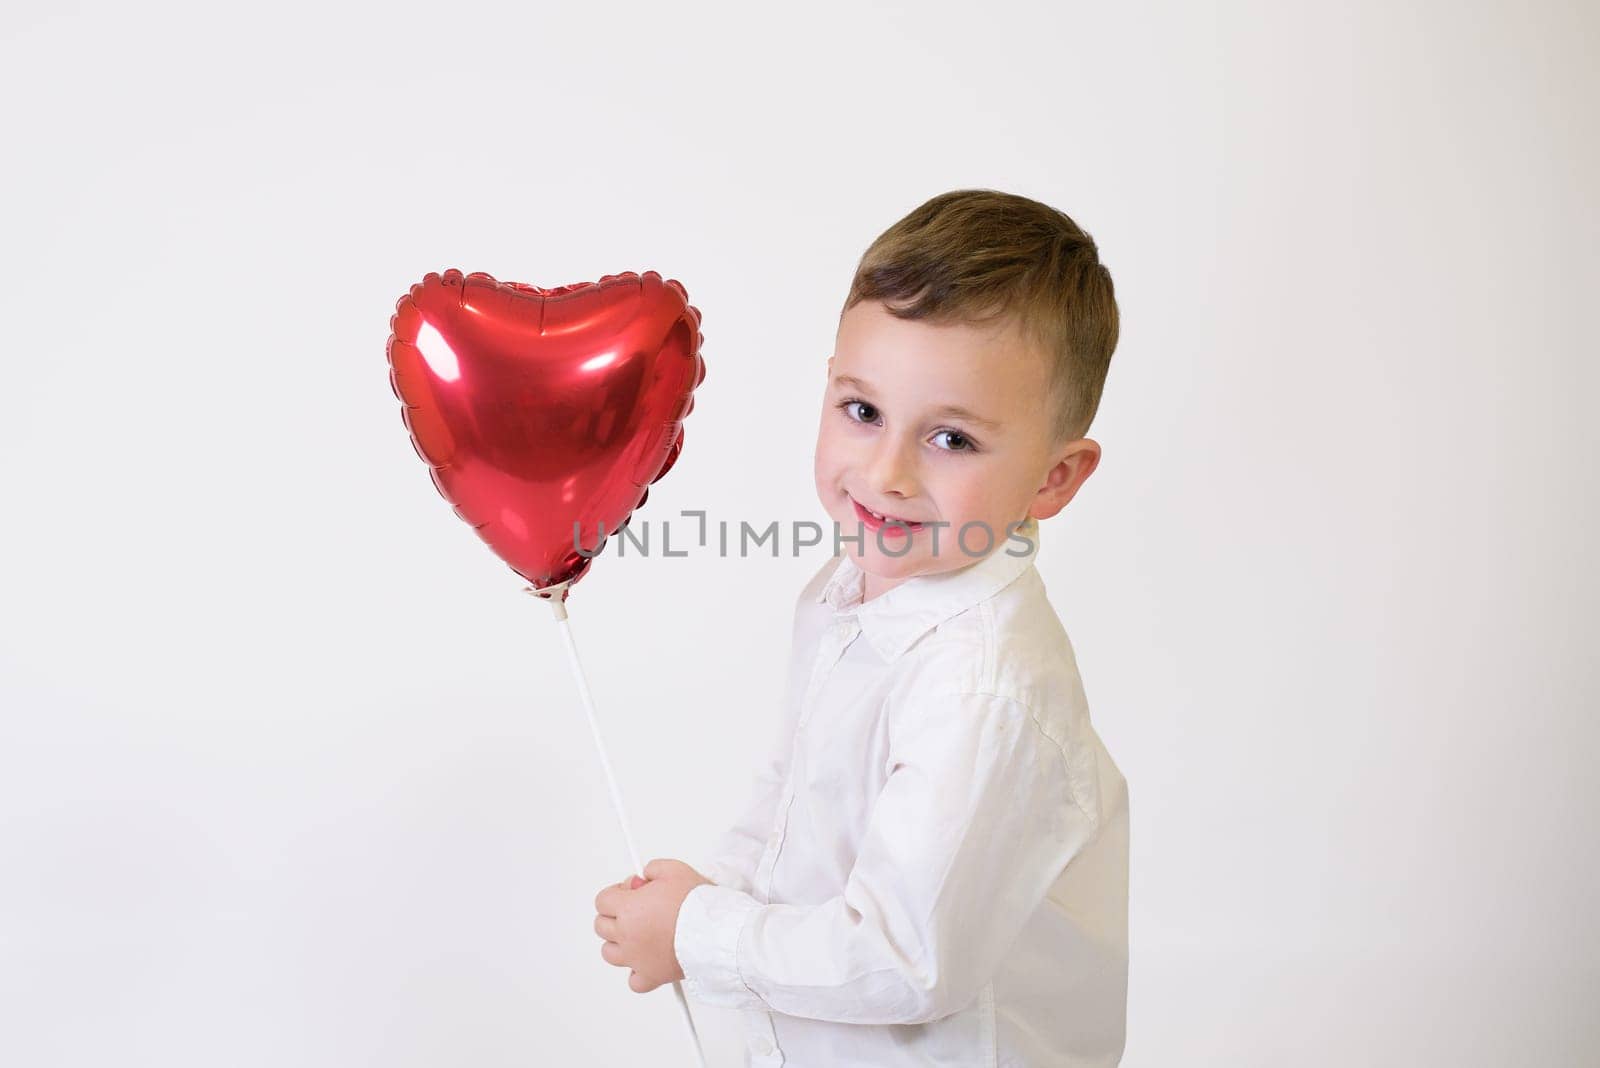 Little children with air balloons on white background. Valentine's Day Celebration.